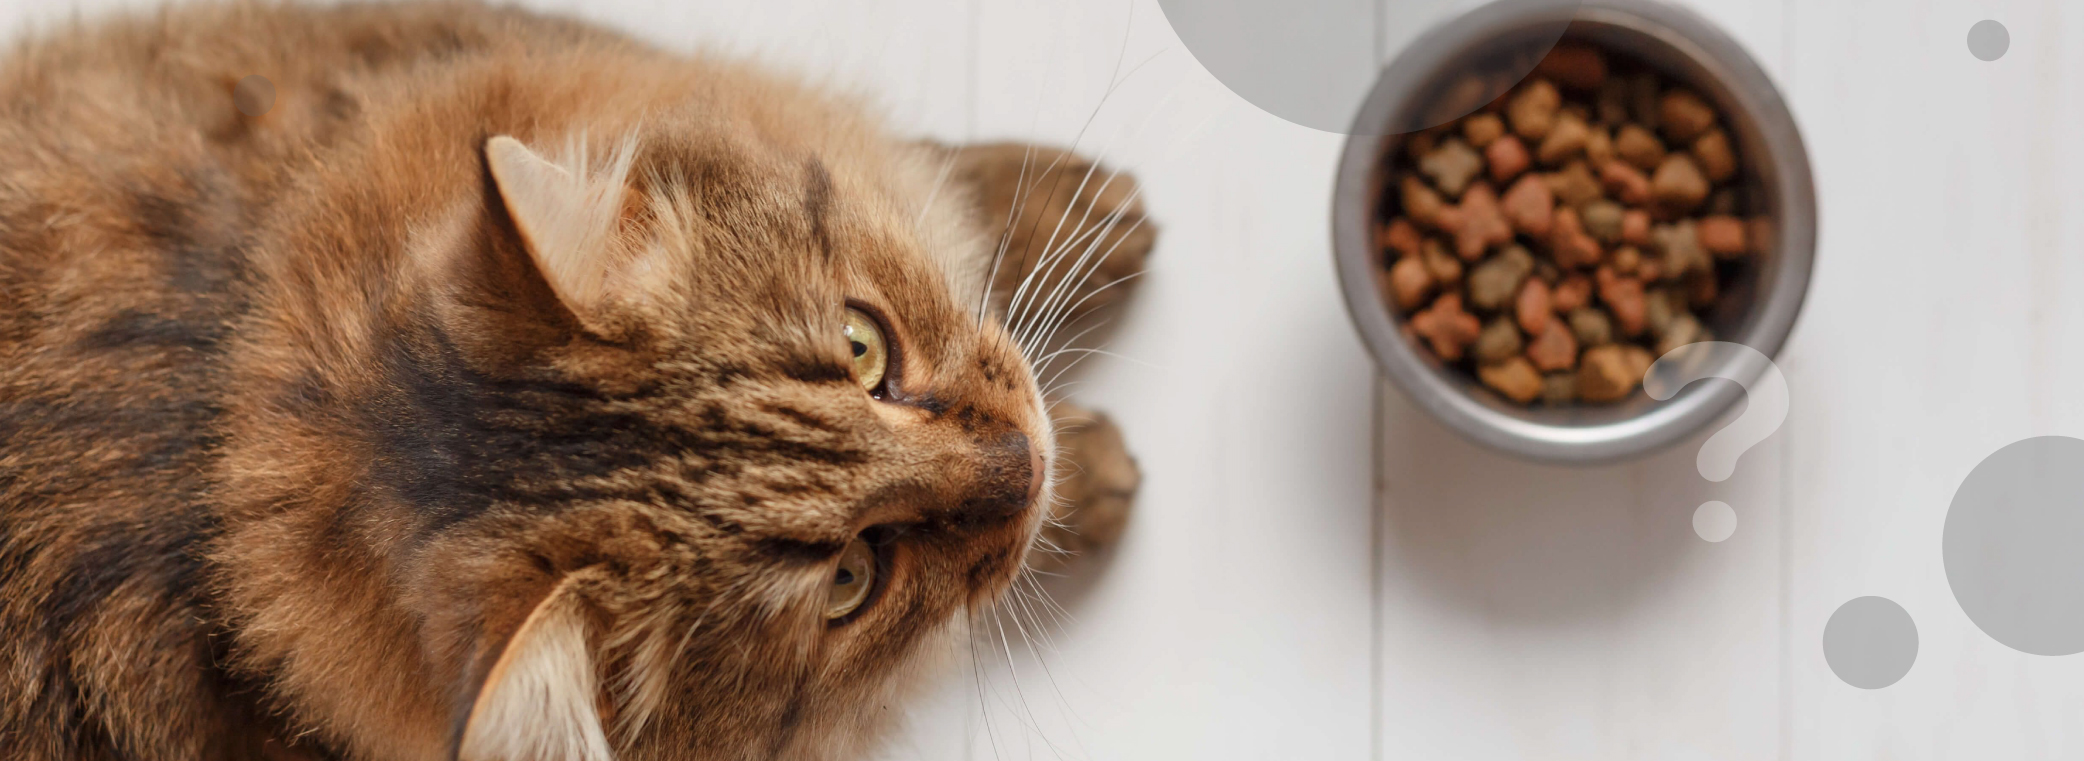 Можно ли кормить кошку только сухим кормом? ᐈ Зоомагазин MasterZoo